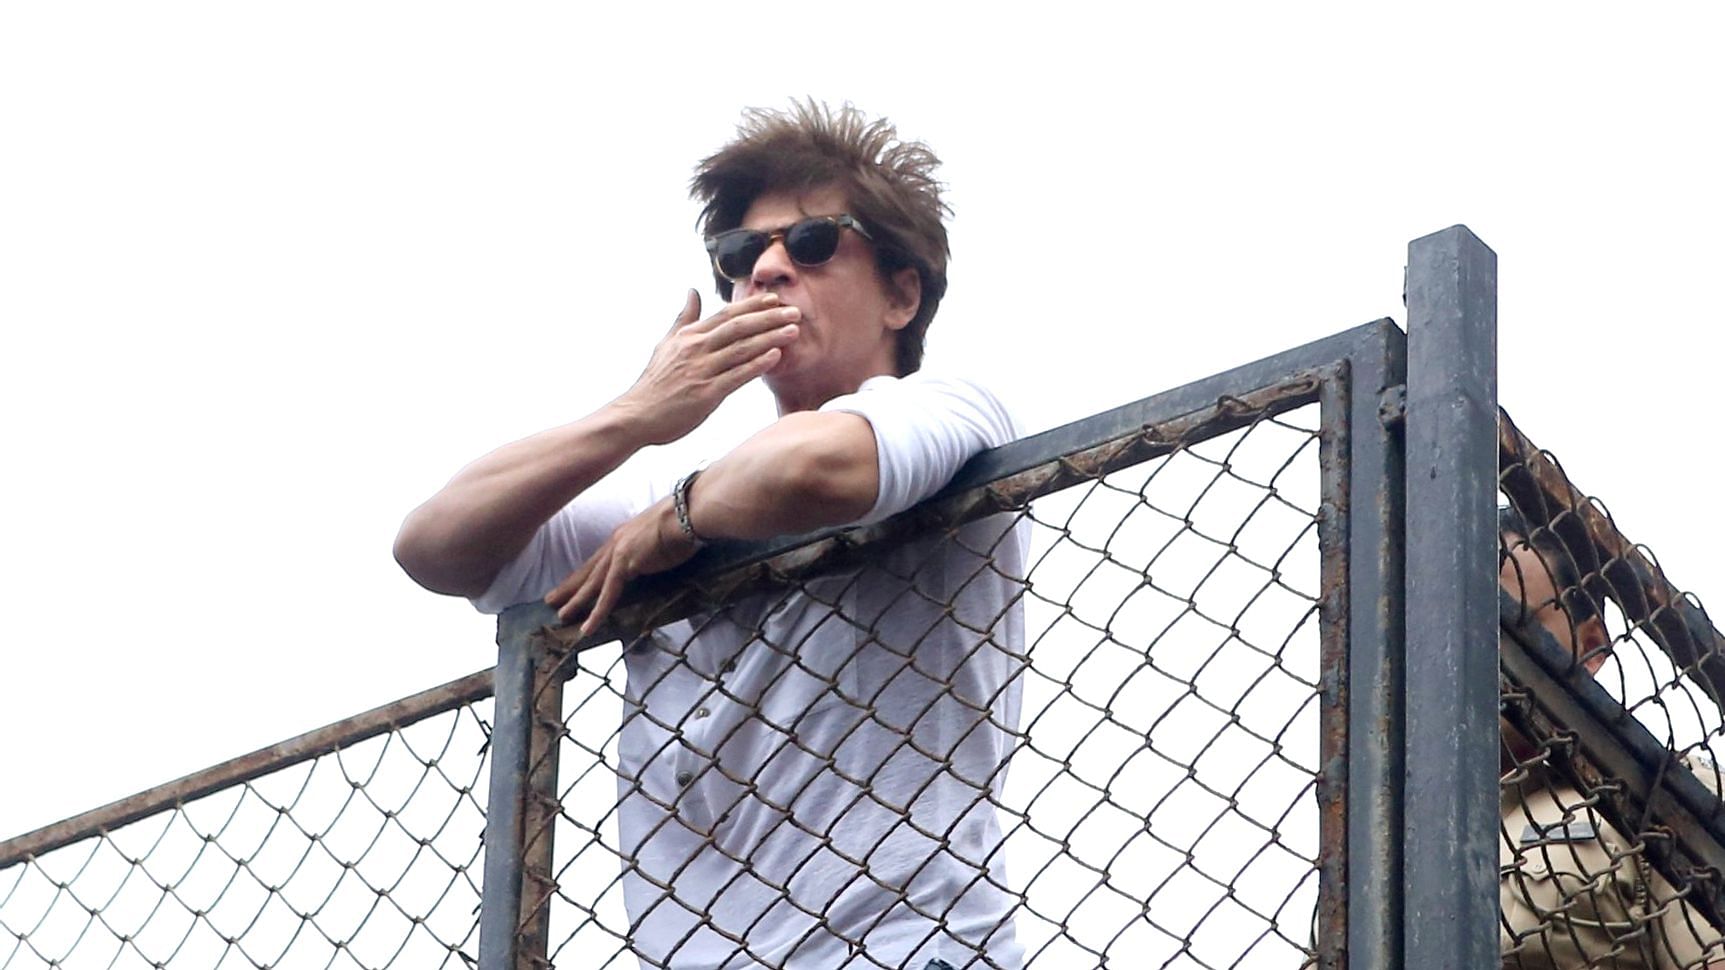 Shah Rukh Khan is currently working on Aanand L Rai’s film <i>Zero</i>.